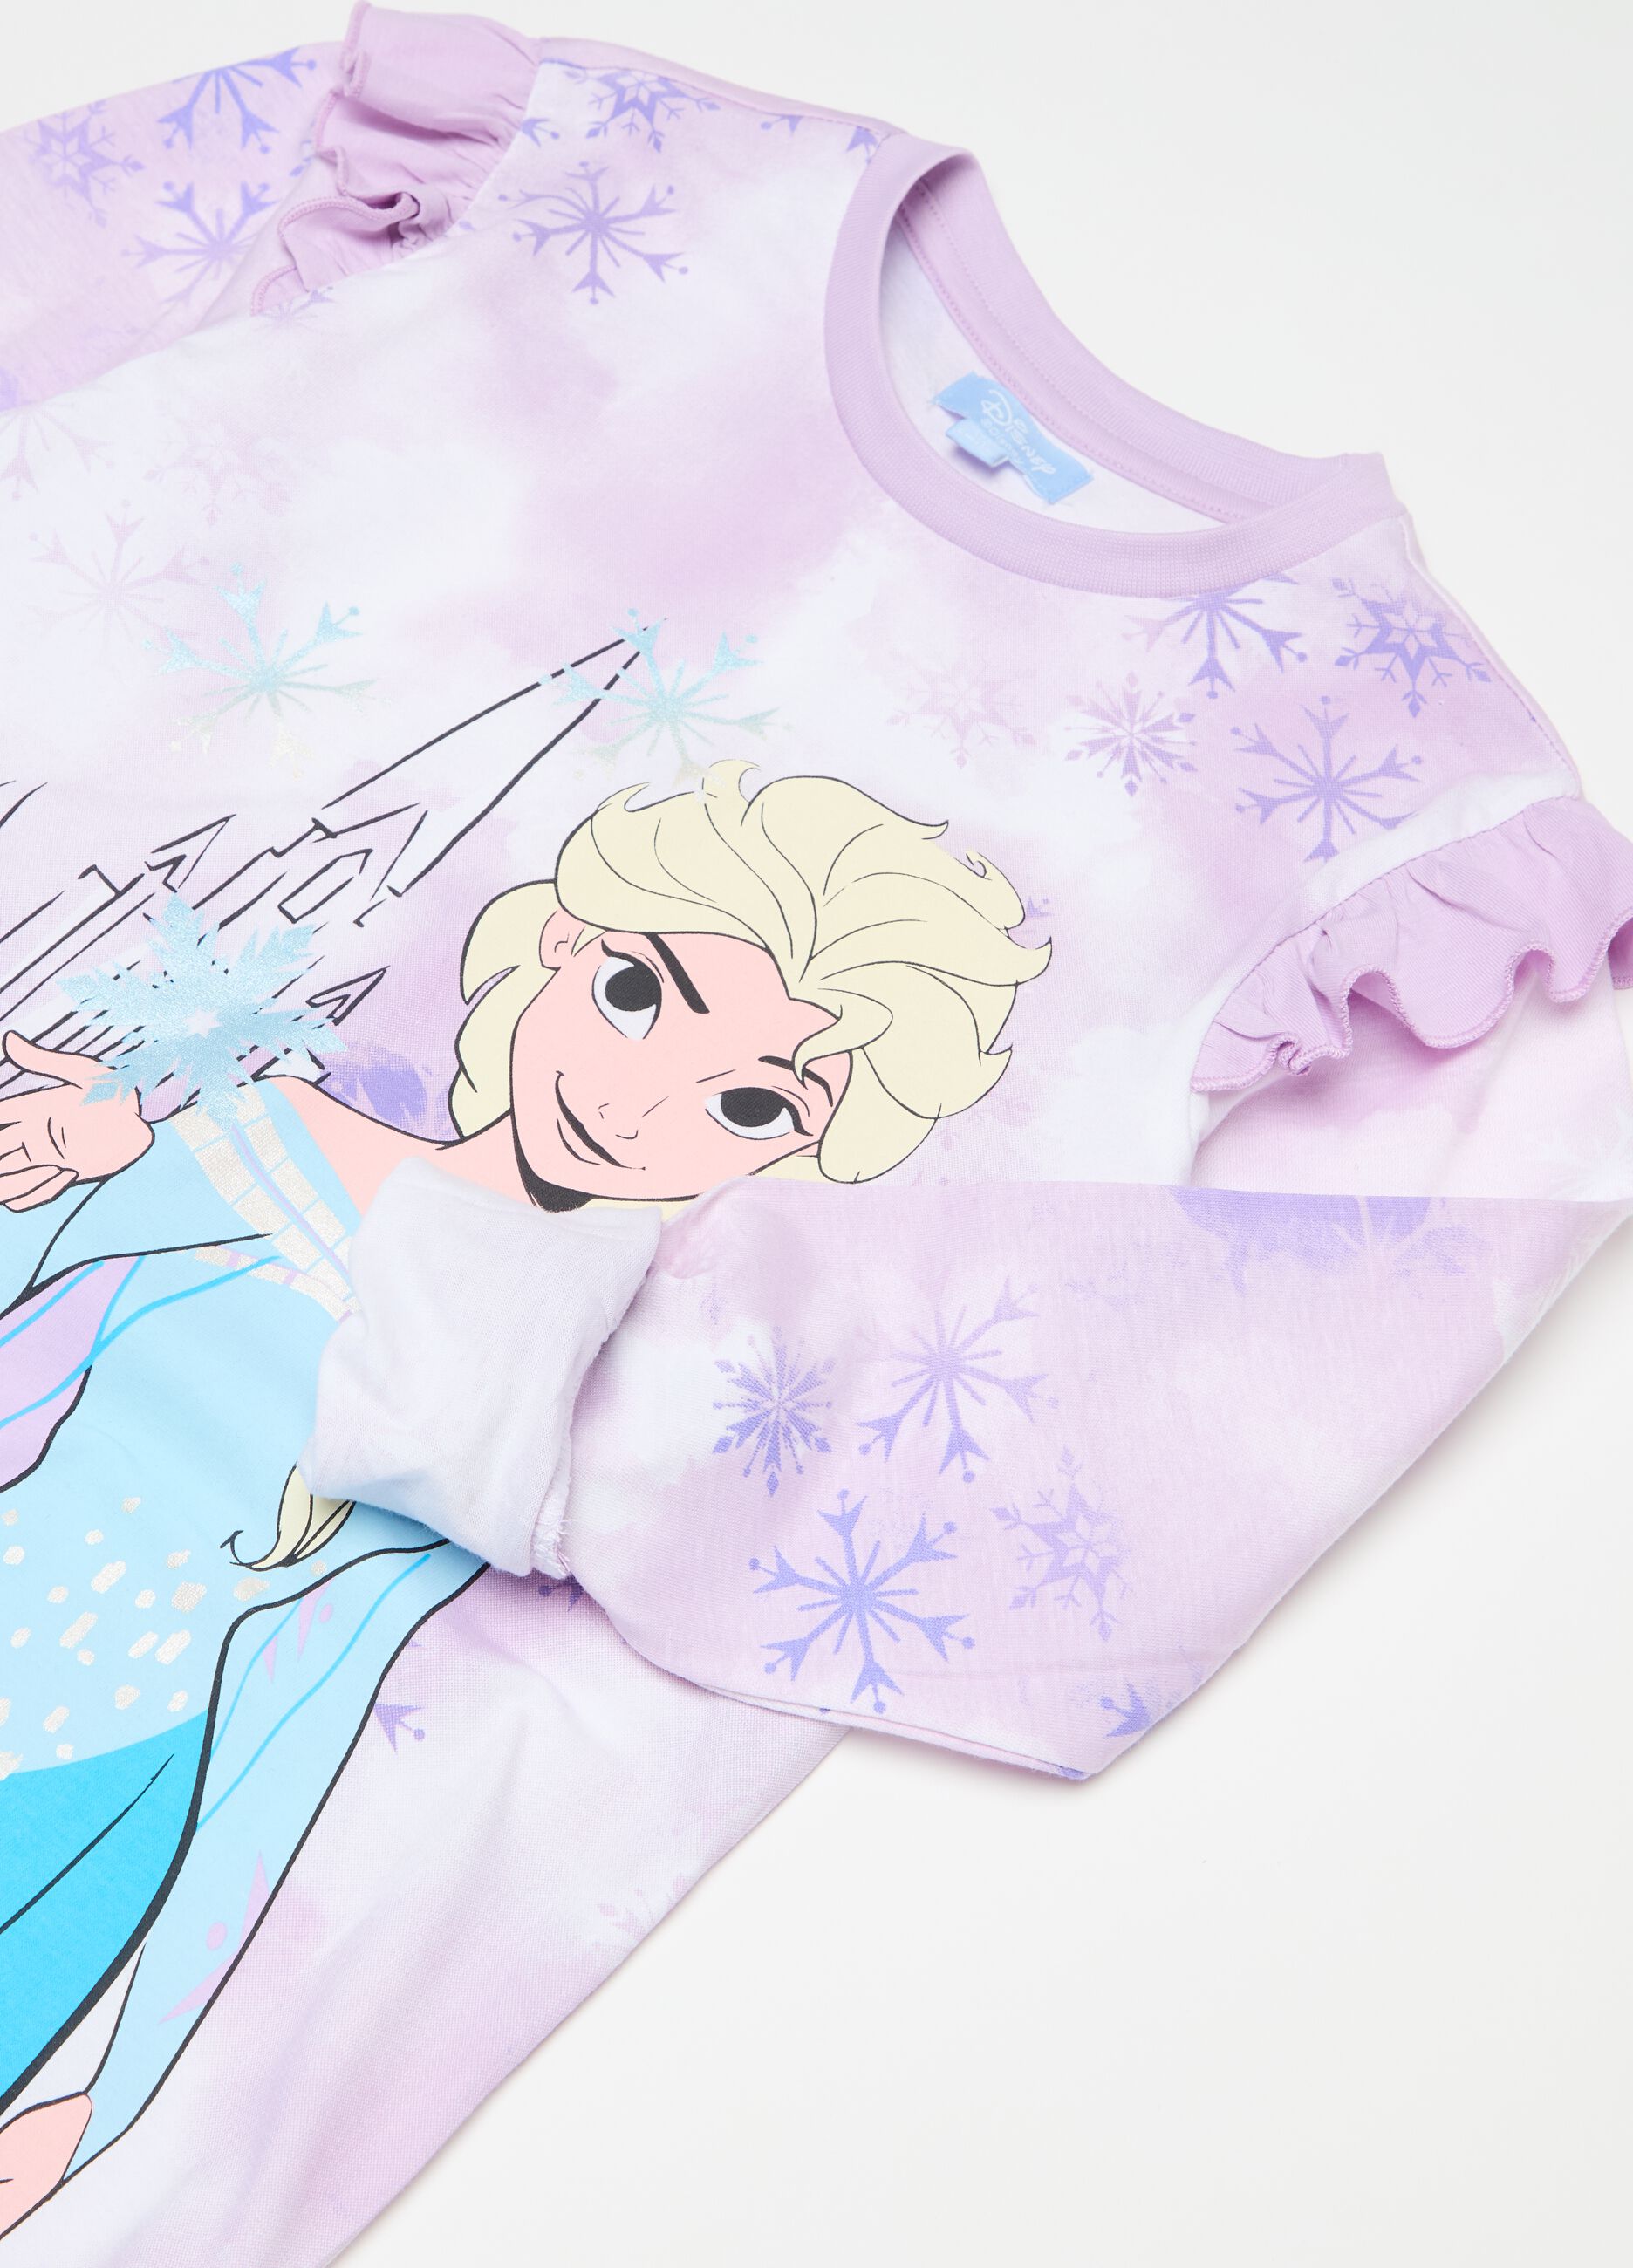 Organic cotton pyjamas with Elsa print